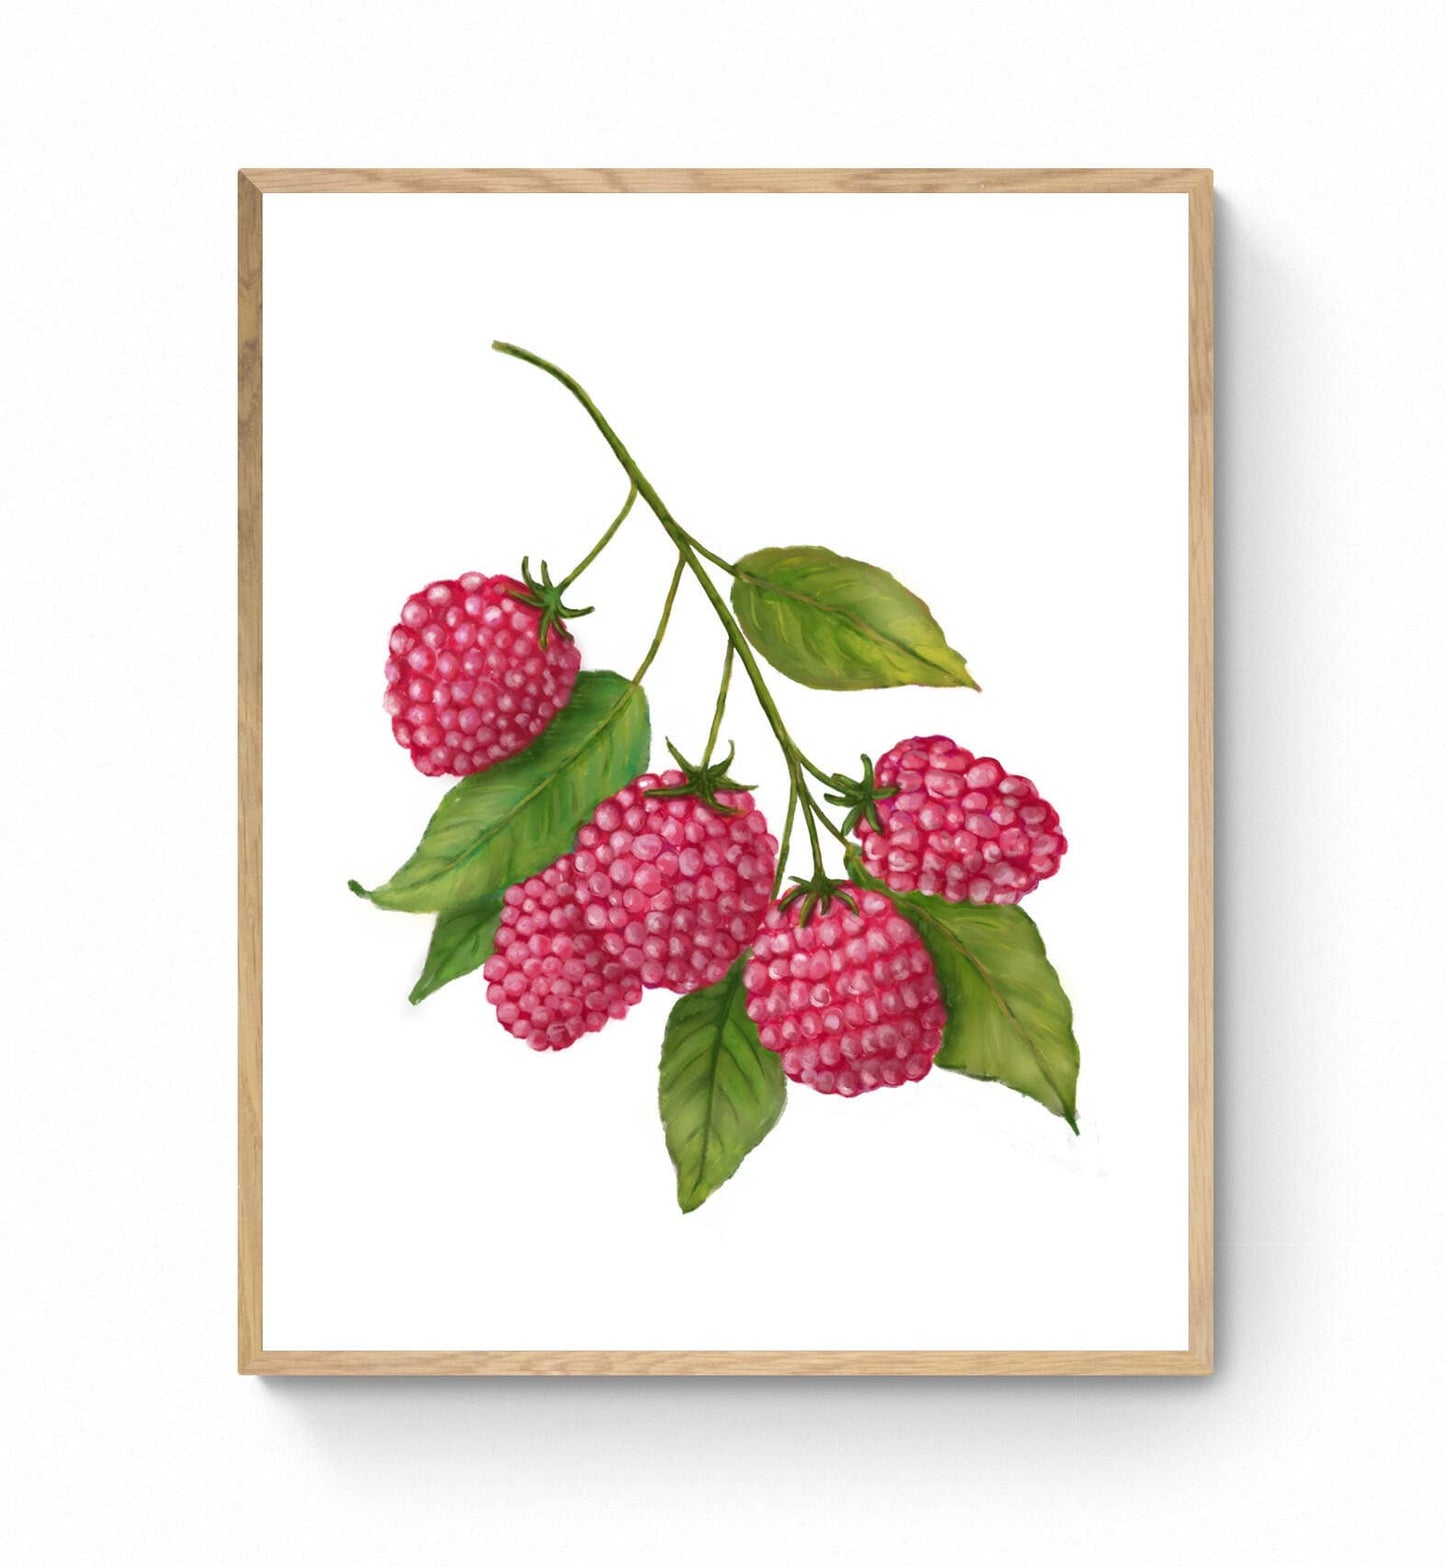 Raspberry Art Print, Raspberry Wall Art, Kitchen Wall Hanging, Dining Room Decor, Berry Painting, Fruit Illustration, Farmhouse Wall Decor